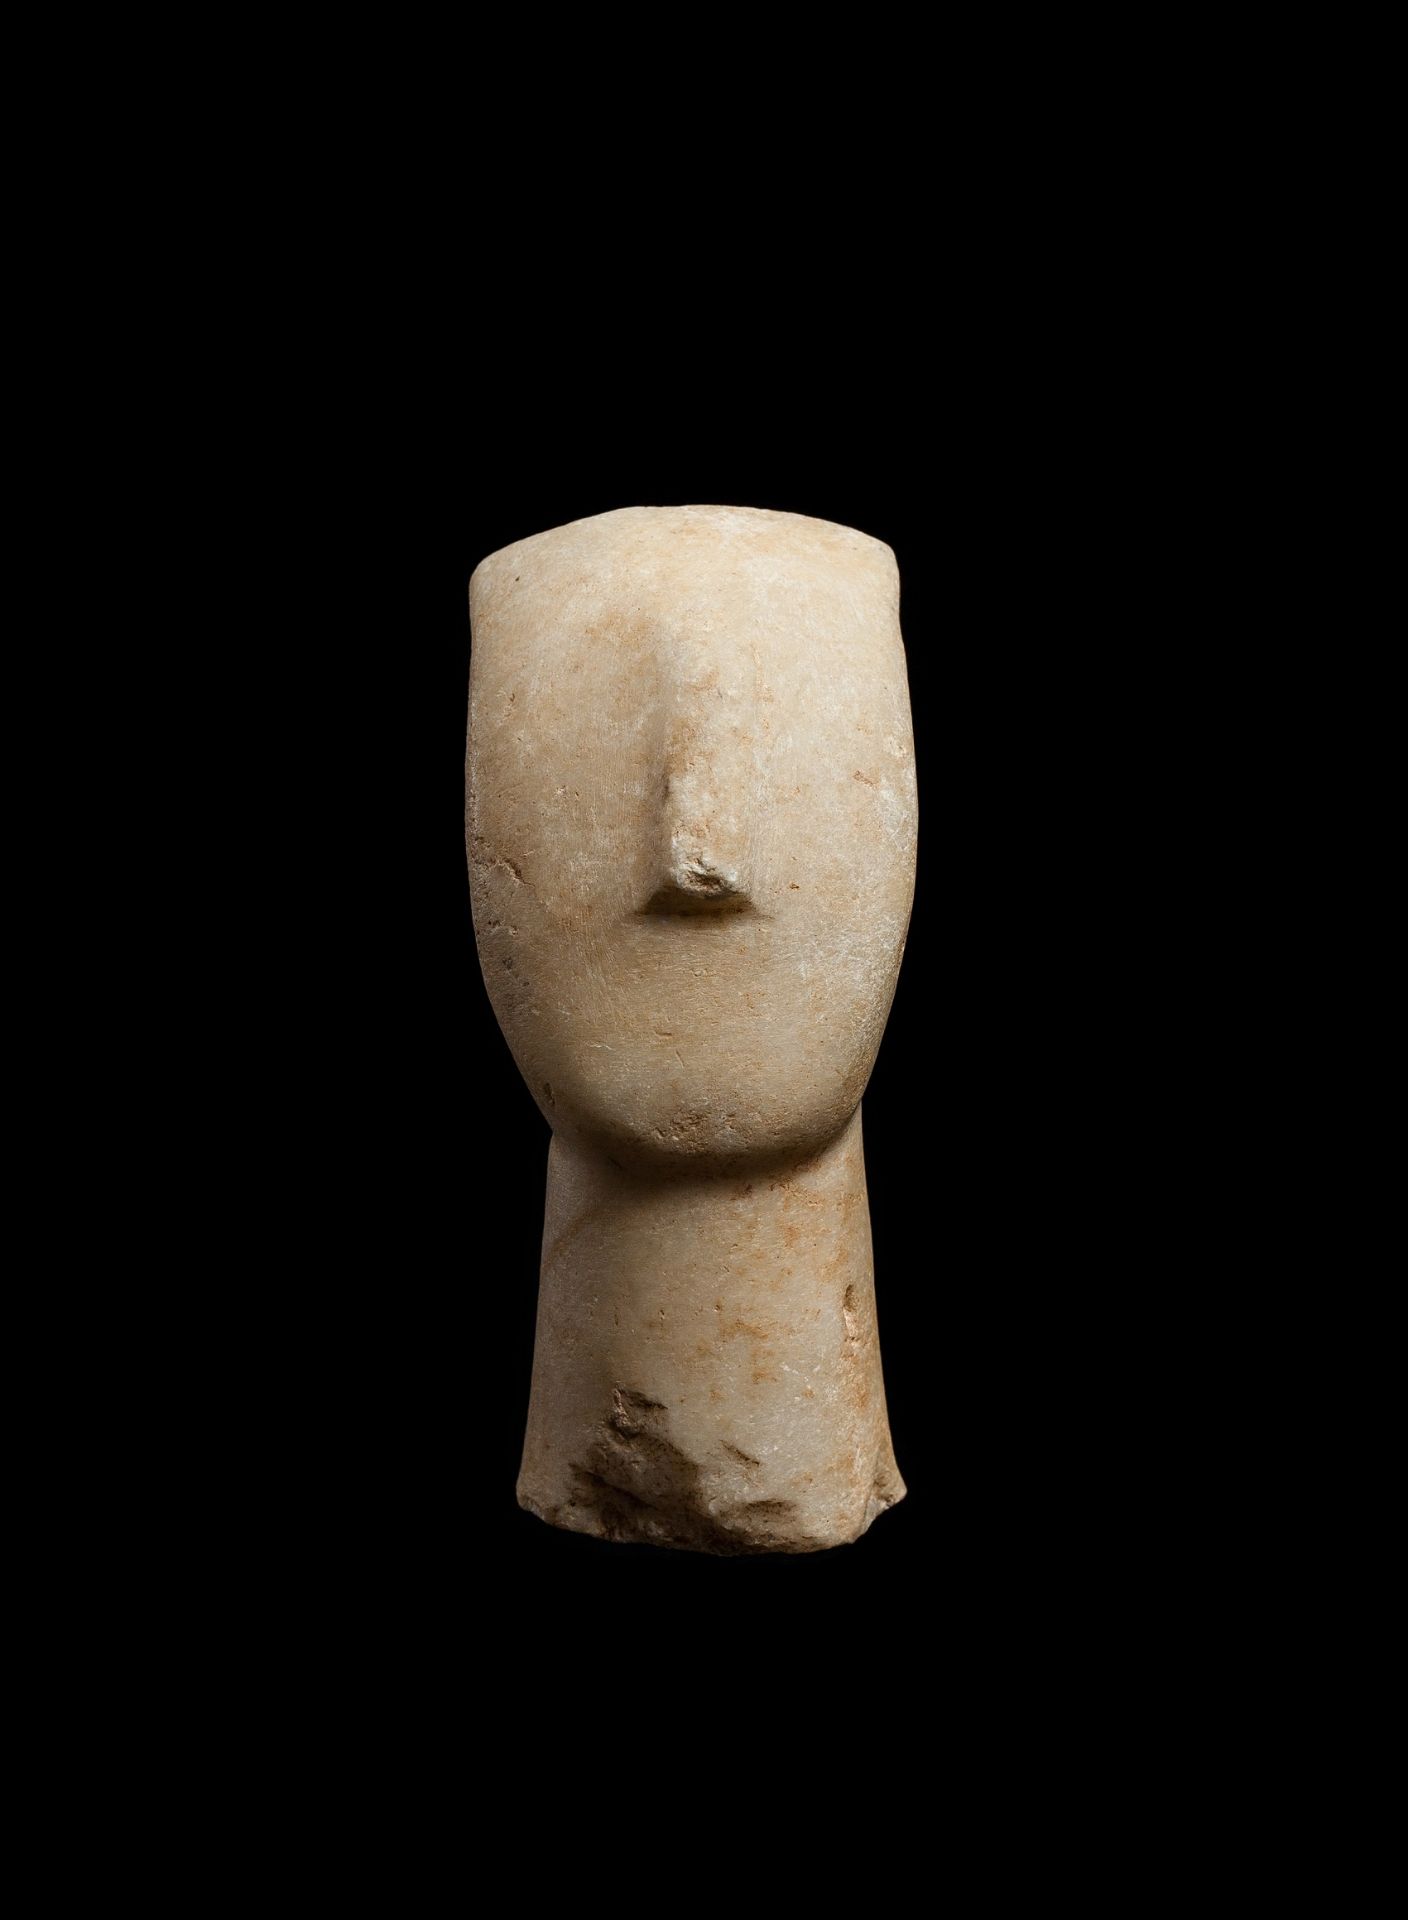 CYCLADIC IDOL HEAD CYCLADES, EARLY CYCLADIC II, C. 2600 - 2400 B.C.